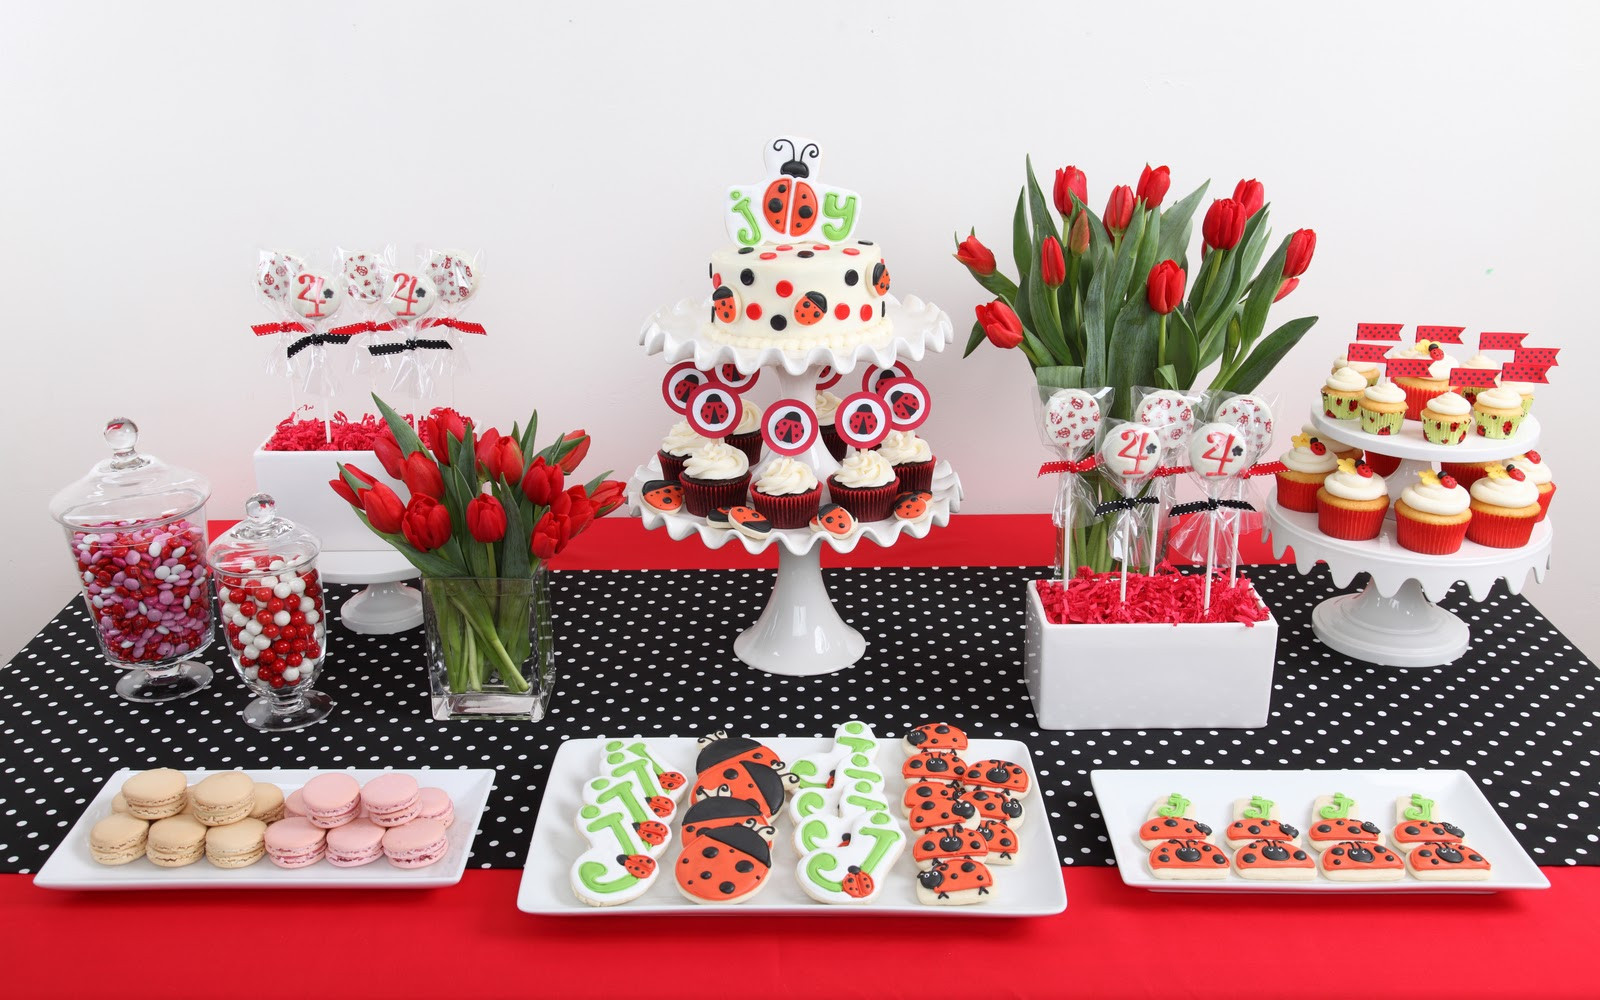 Best ideas about Ladybug Birthday Party
. Save or Pin Joy’s Ladybug Birthday – Glorious Treats Now.